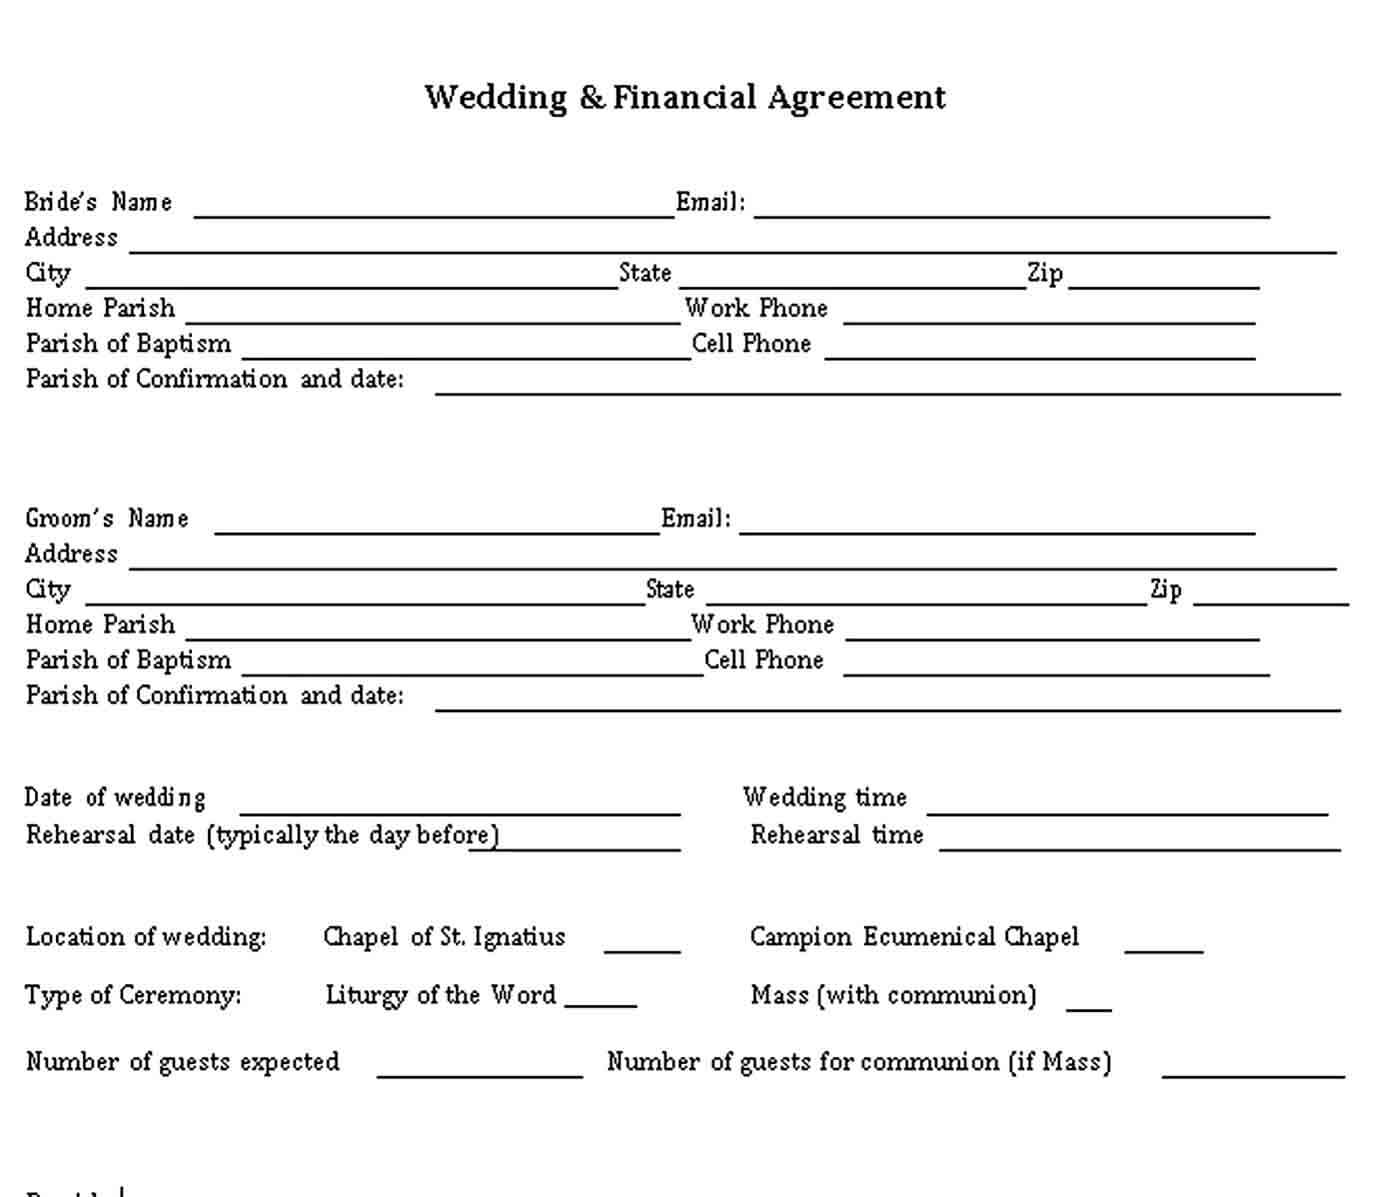 Sample Wedding Finance Agreement